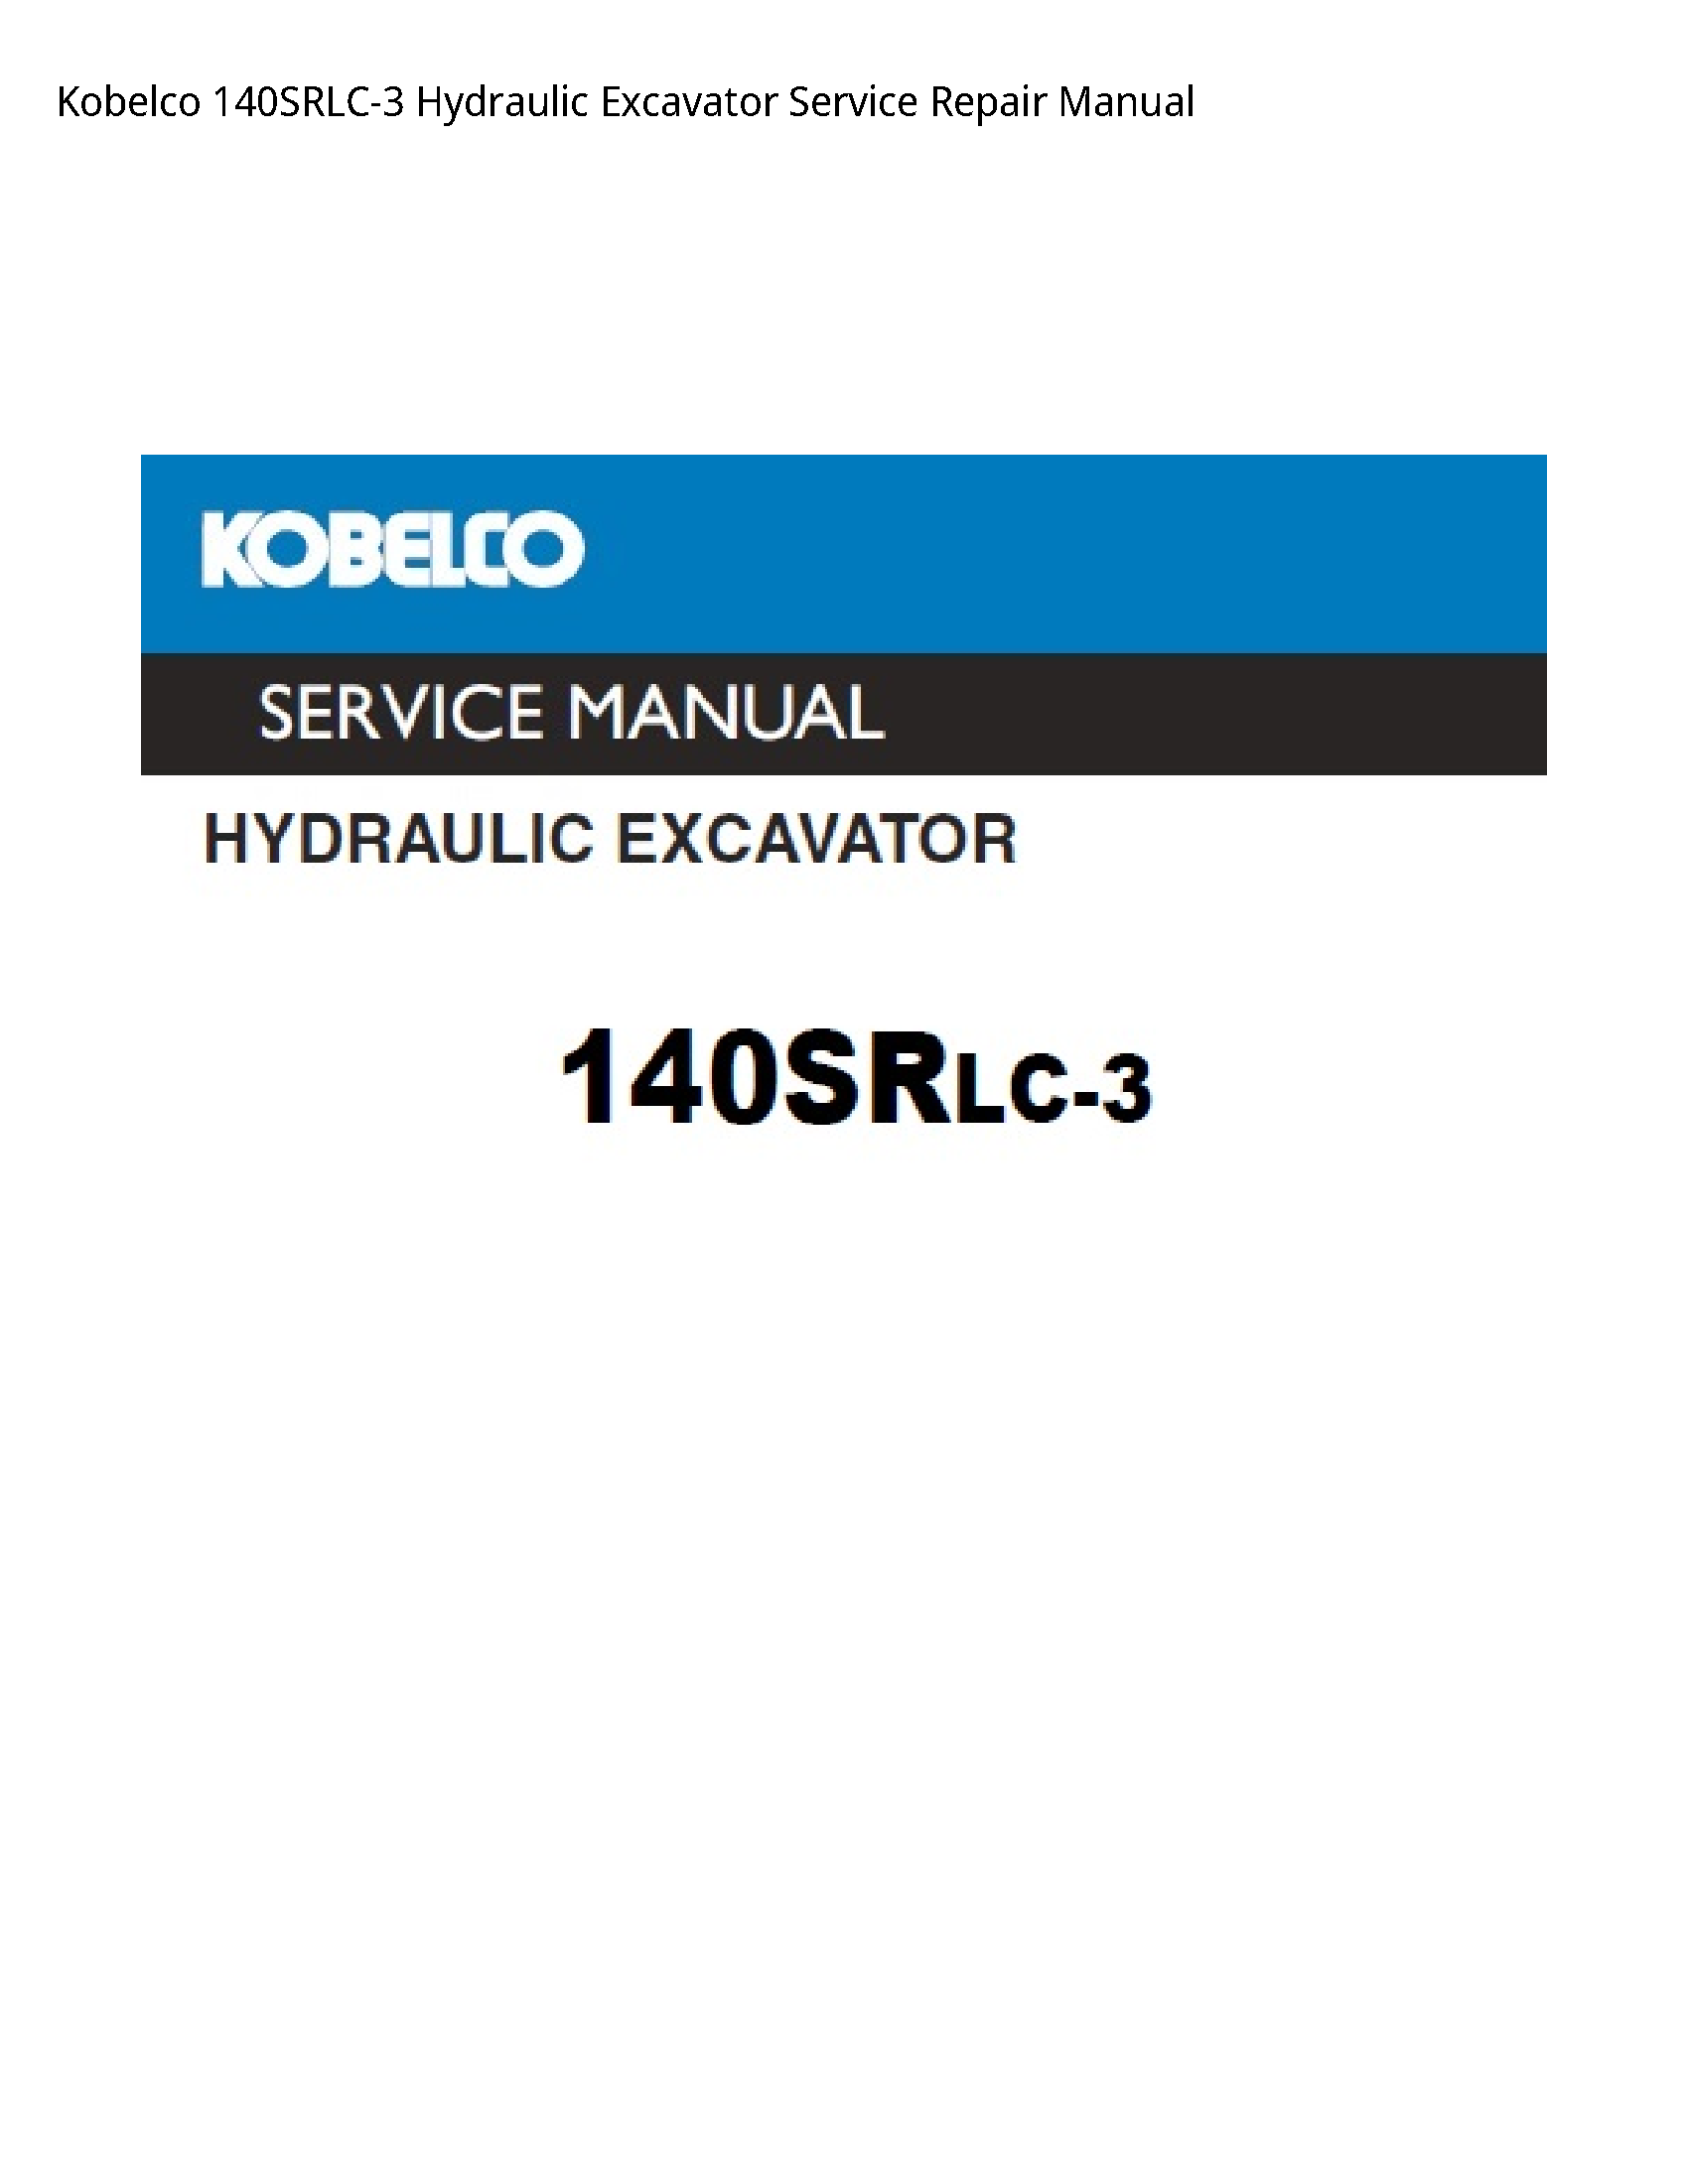 Kobelco 140SRLC-3 Hydraulic Excavator manual